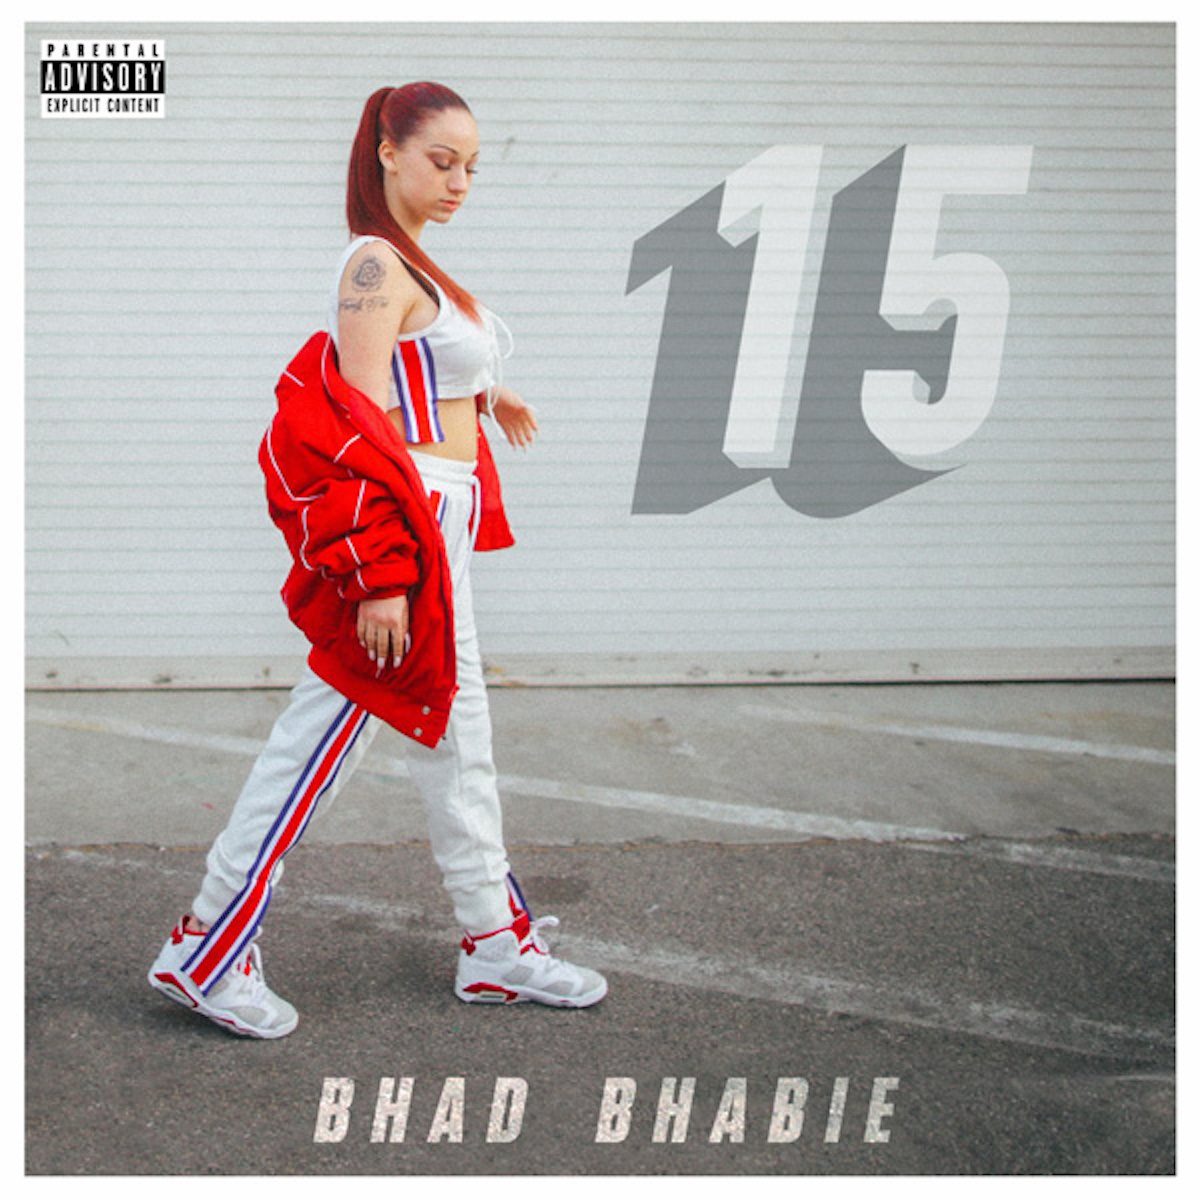 Bhad Bhabie 15 mixtape cover